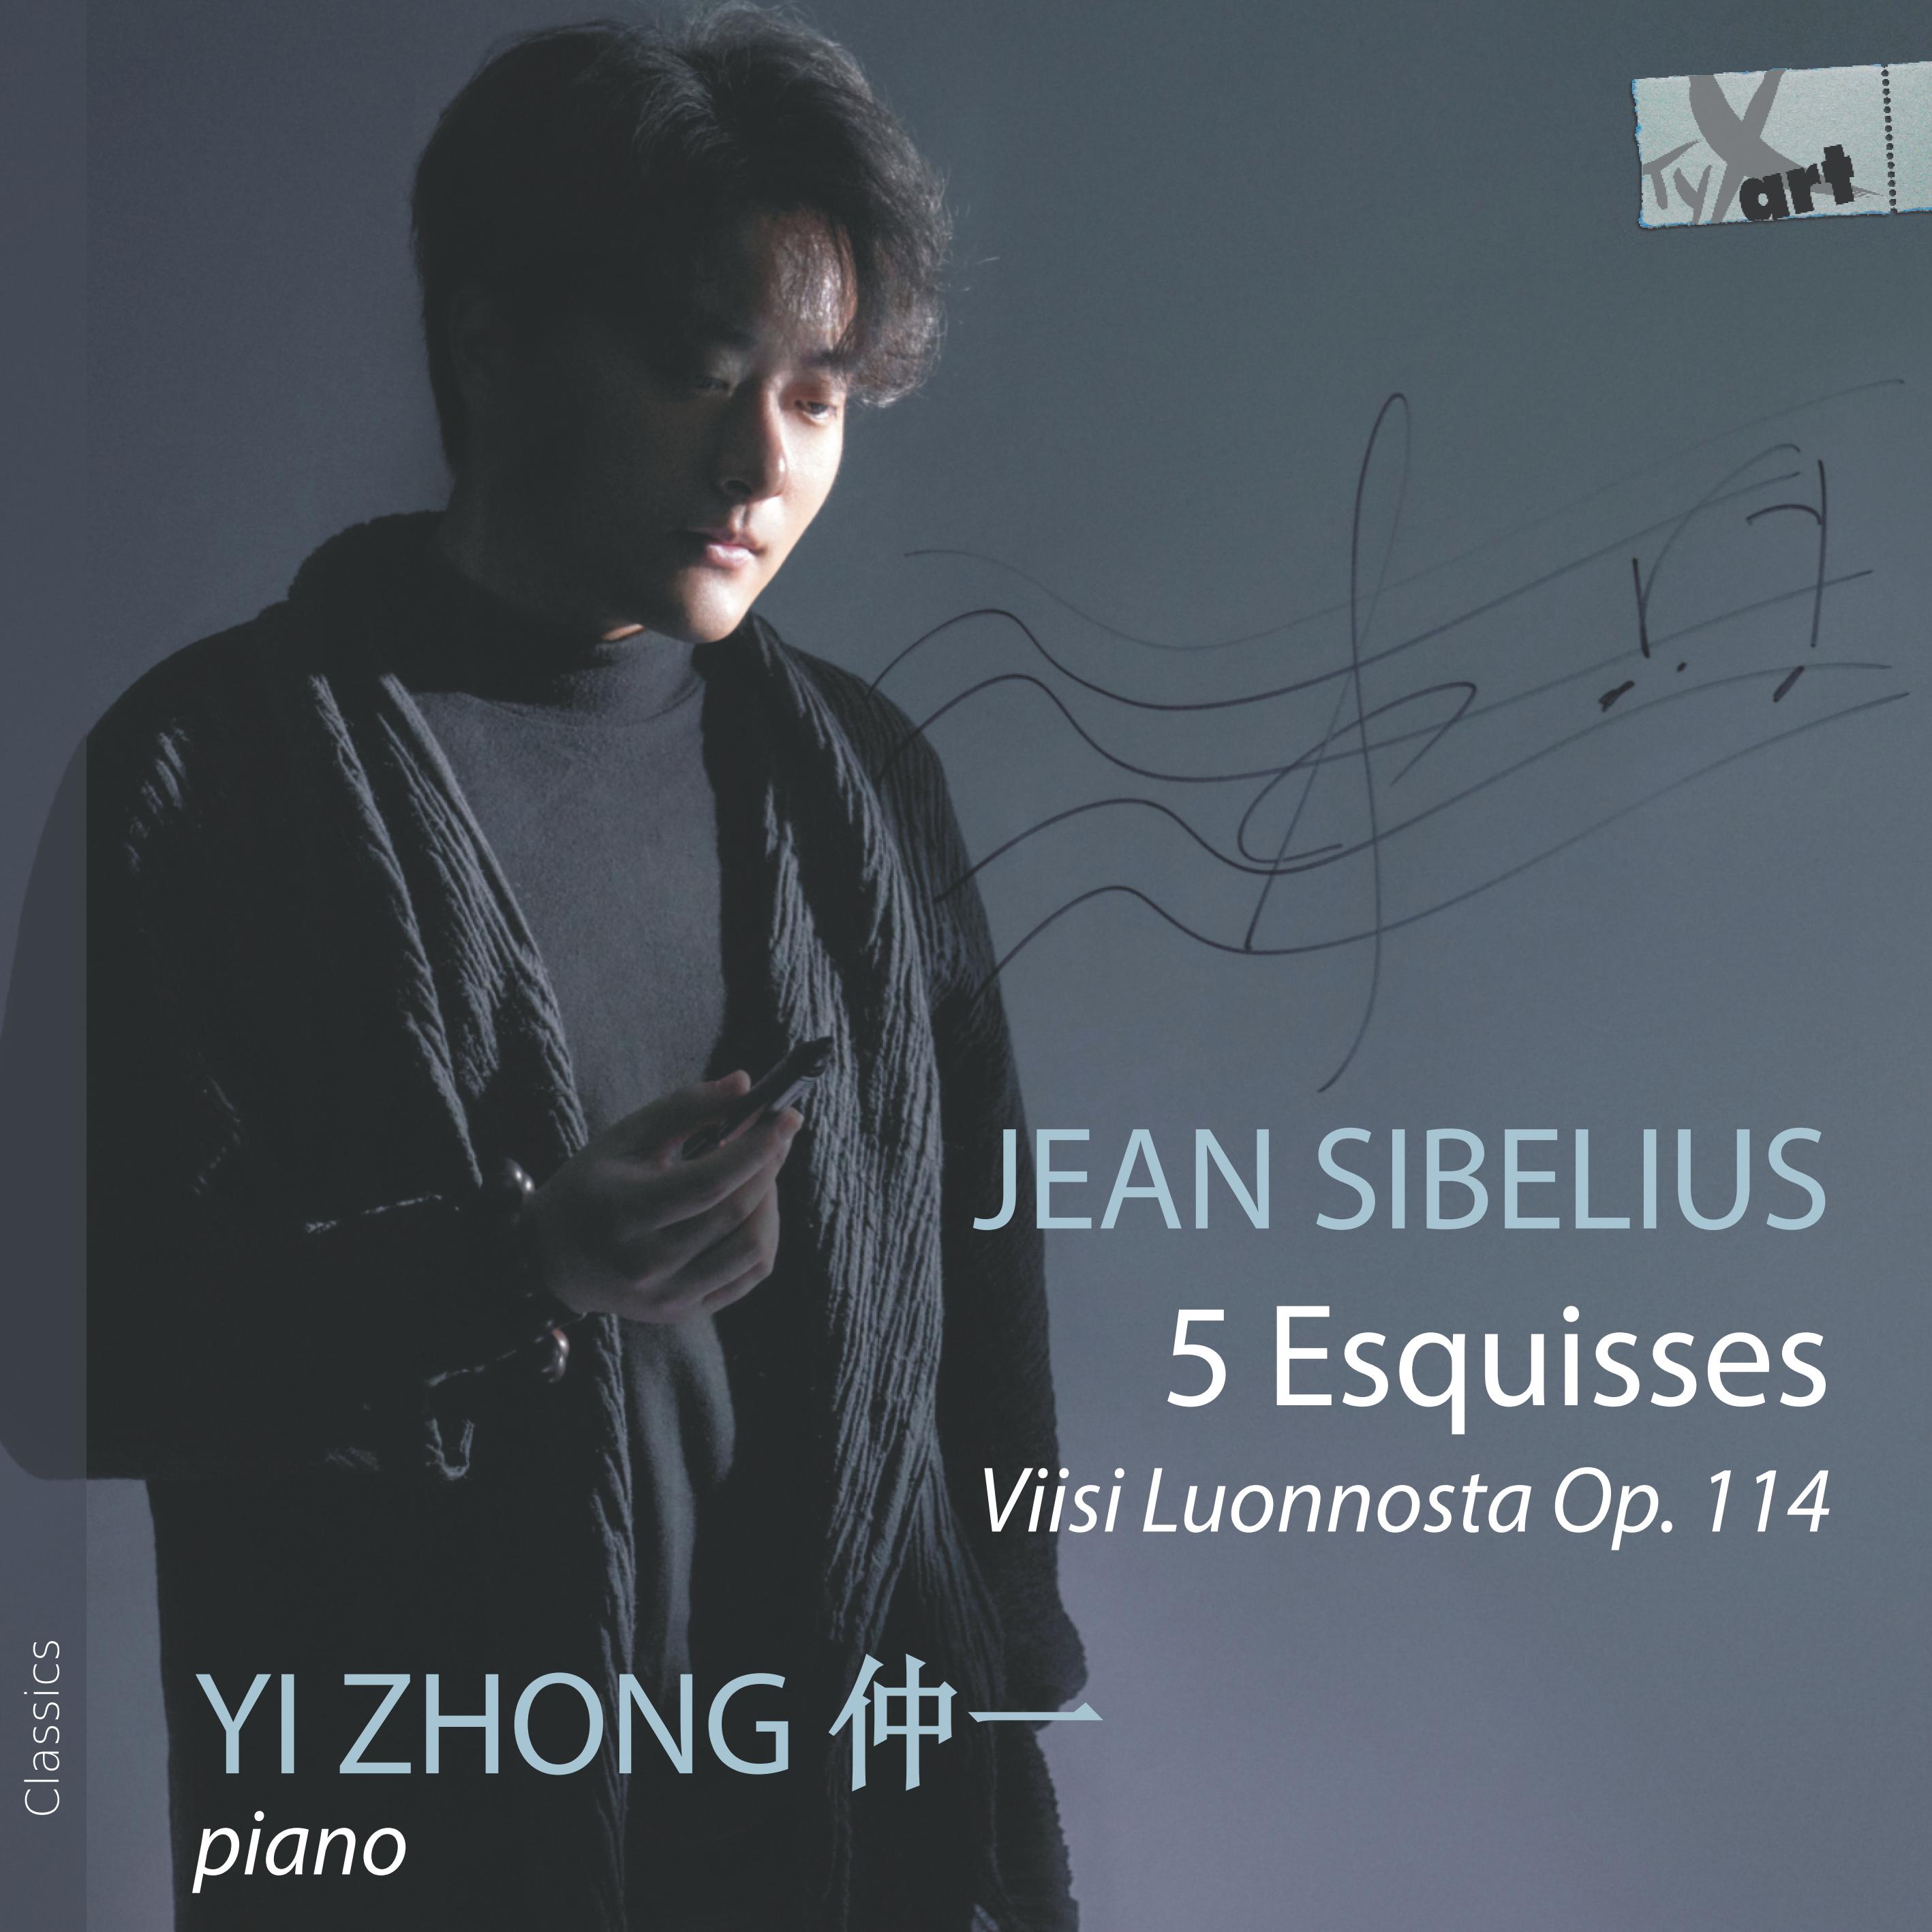 J. Sibelius: 5 Esquisses, Op. 114 (5 Sketches / Viisi Luonnosta) - Yi Zhong, Klavier